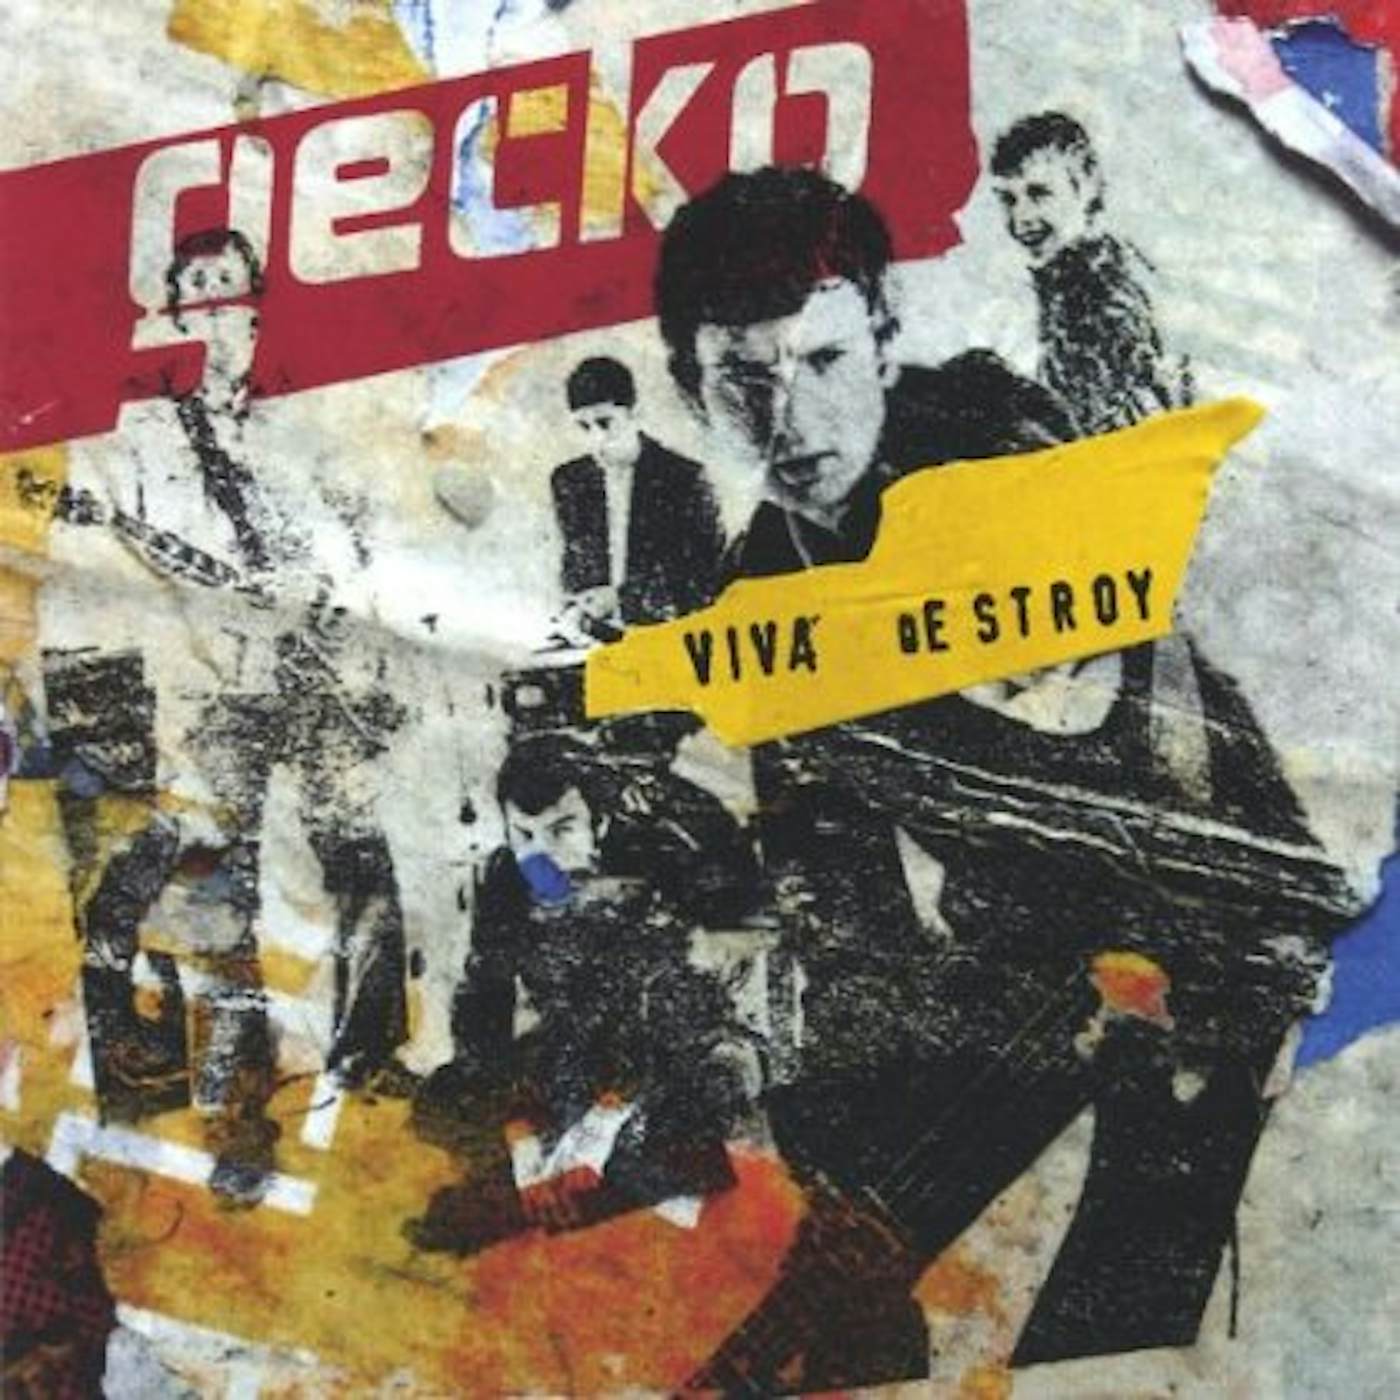 Gecko VIVA DESTROY CD